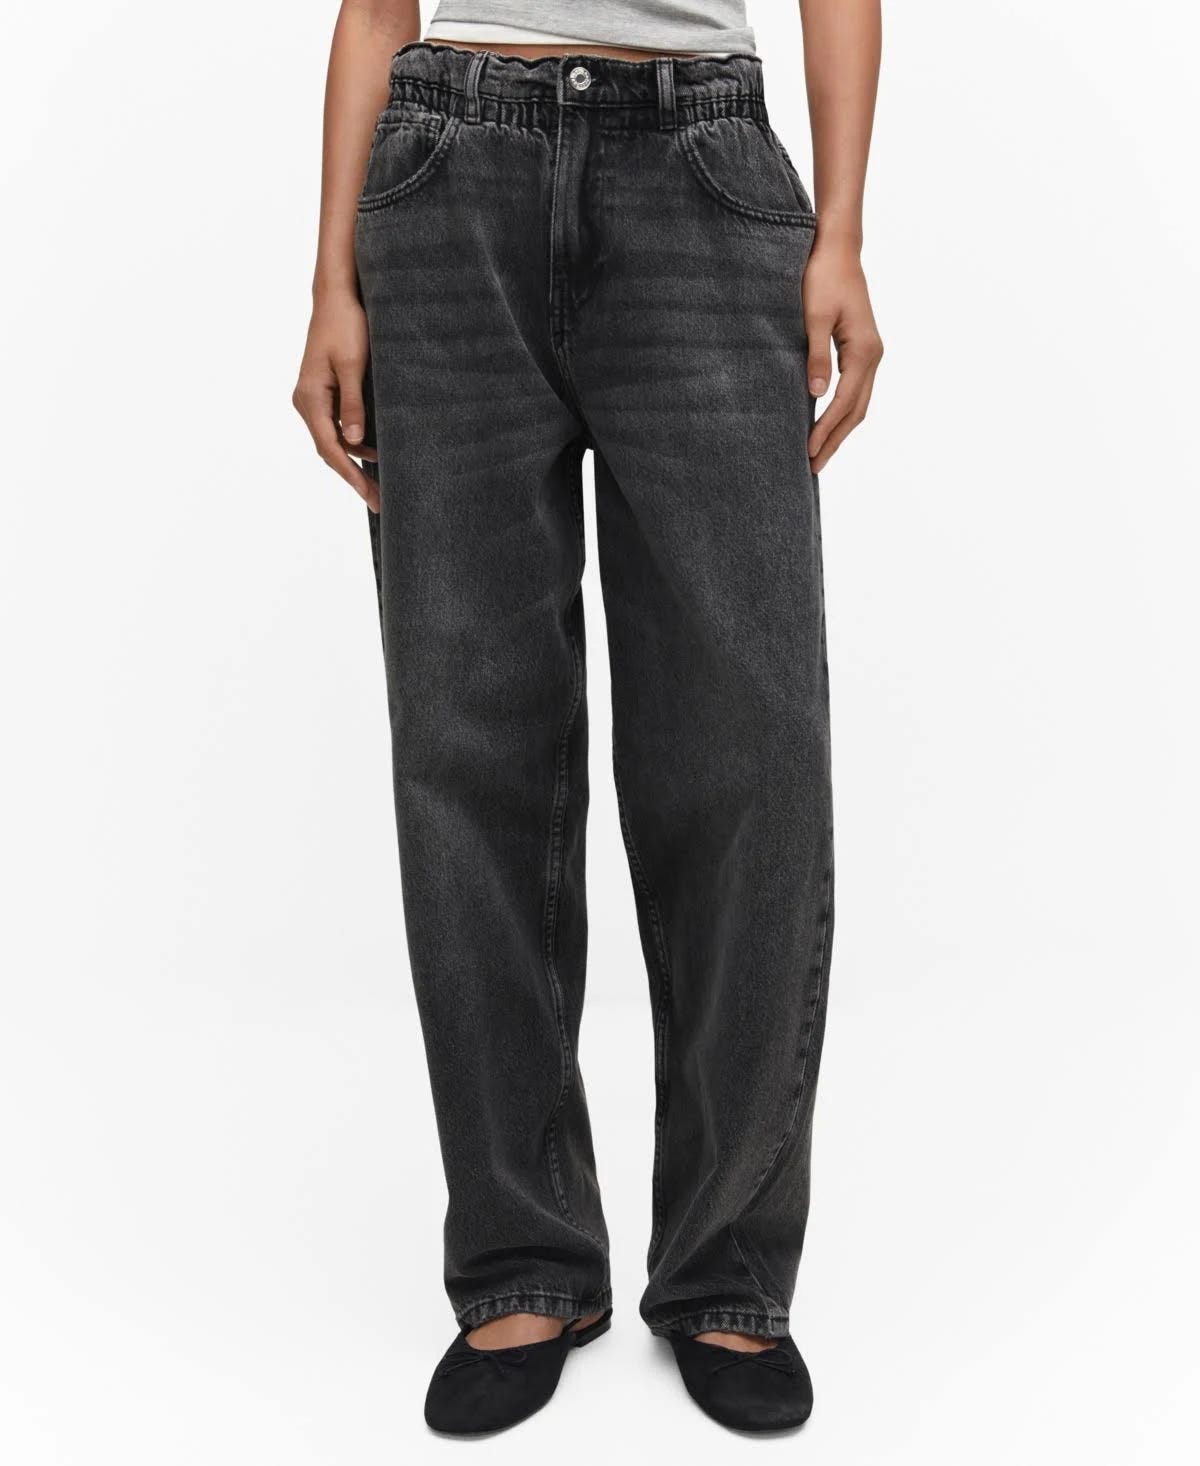 Stylish Slouchy Black Denim Jeans for Women | Image